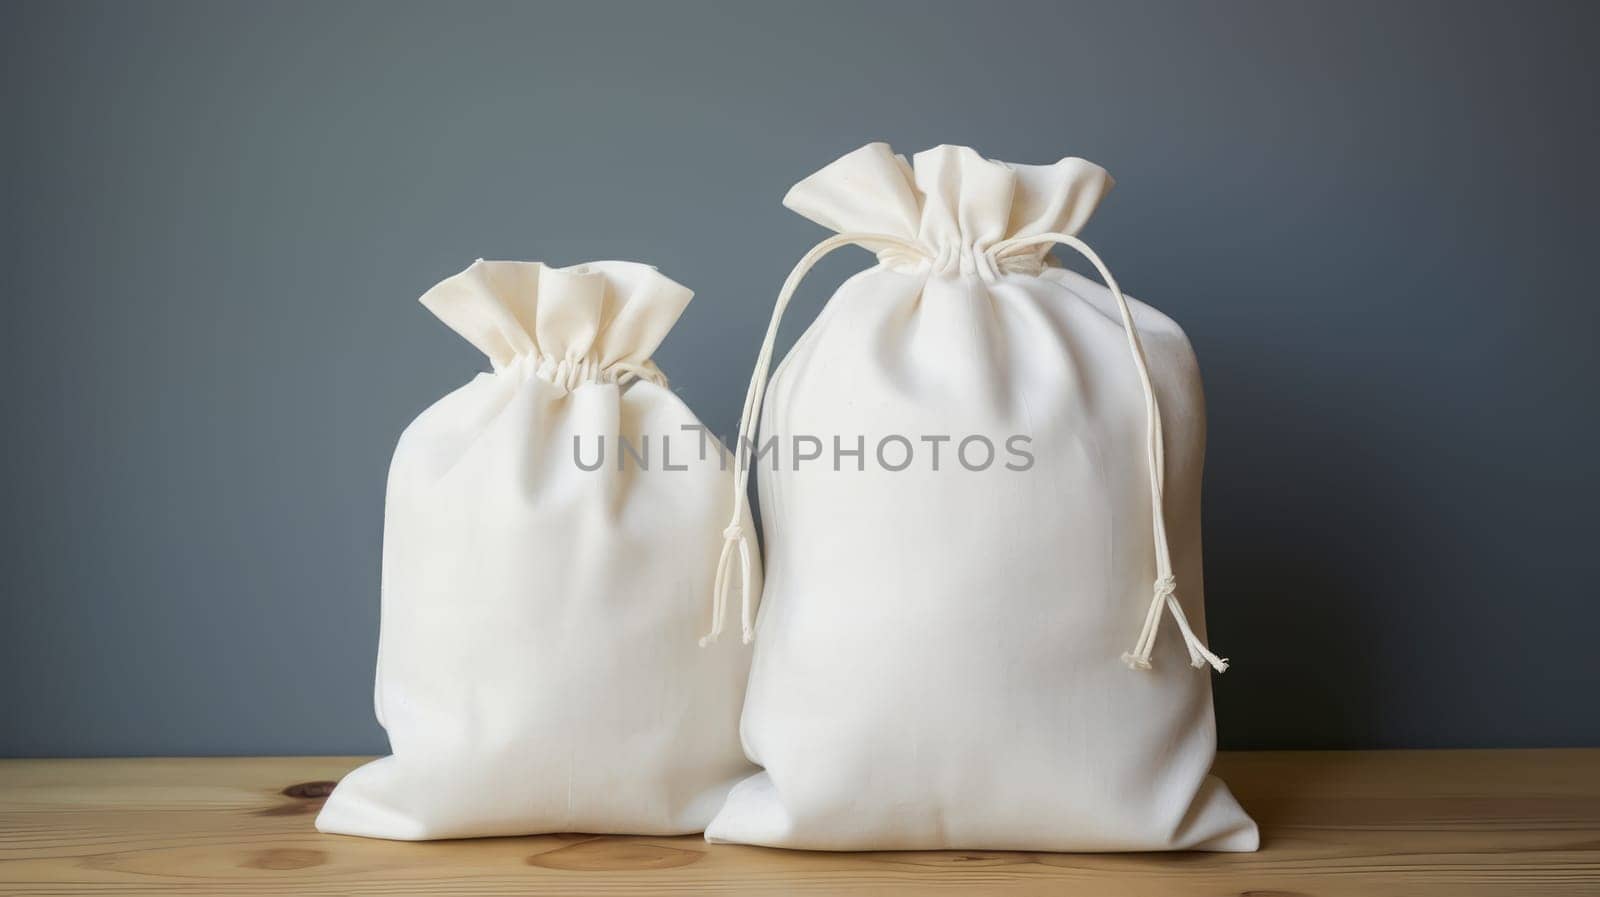 Light Fabric Bags Made of Natural Fabric by Alla_Yurtayeva